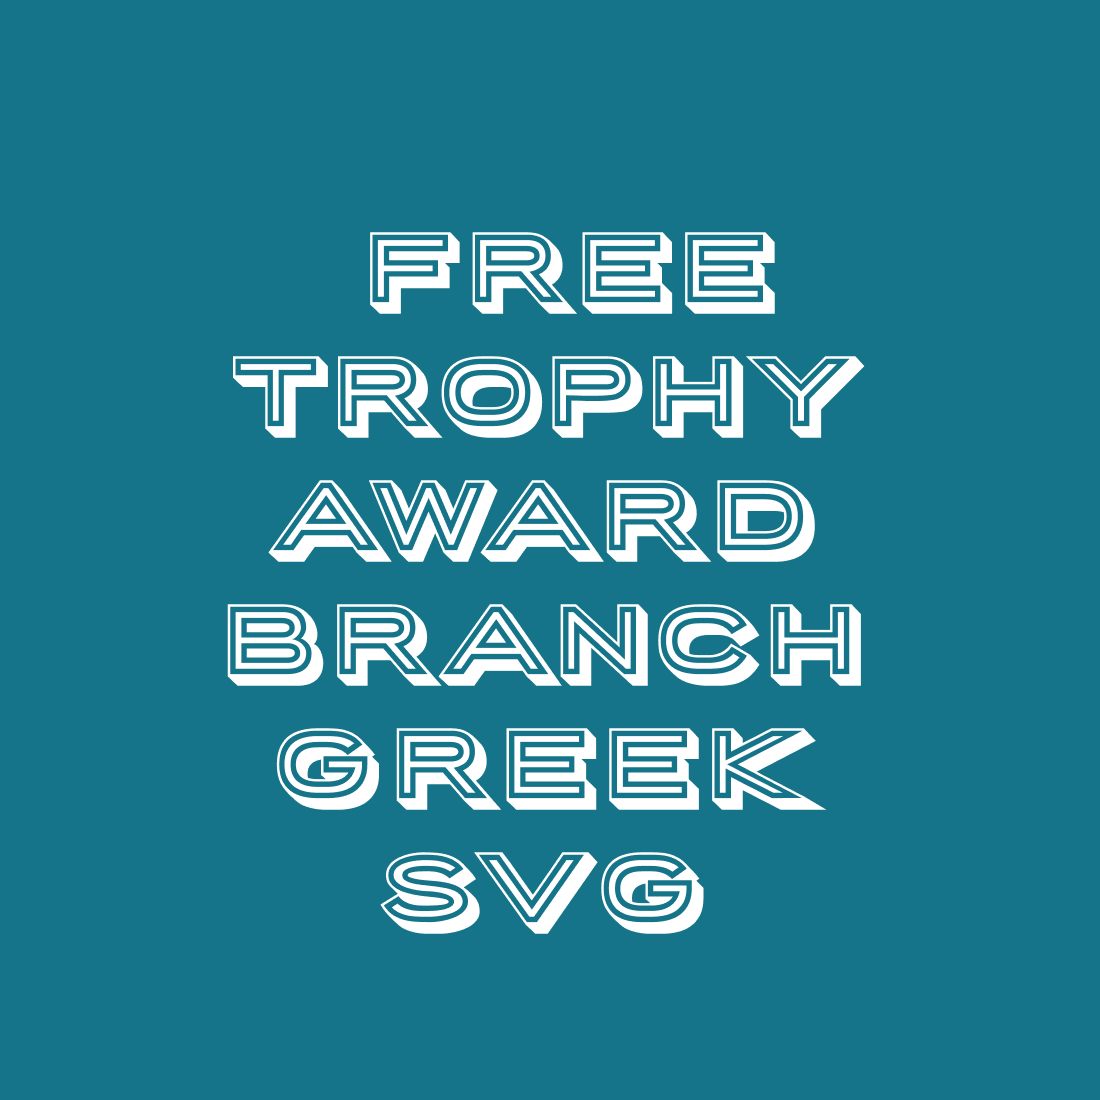 Free Trophy Award Branch Greek SVG cover image.